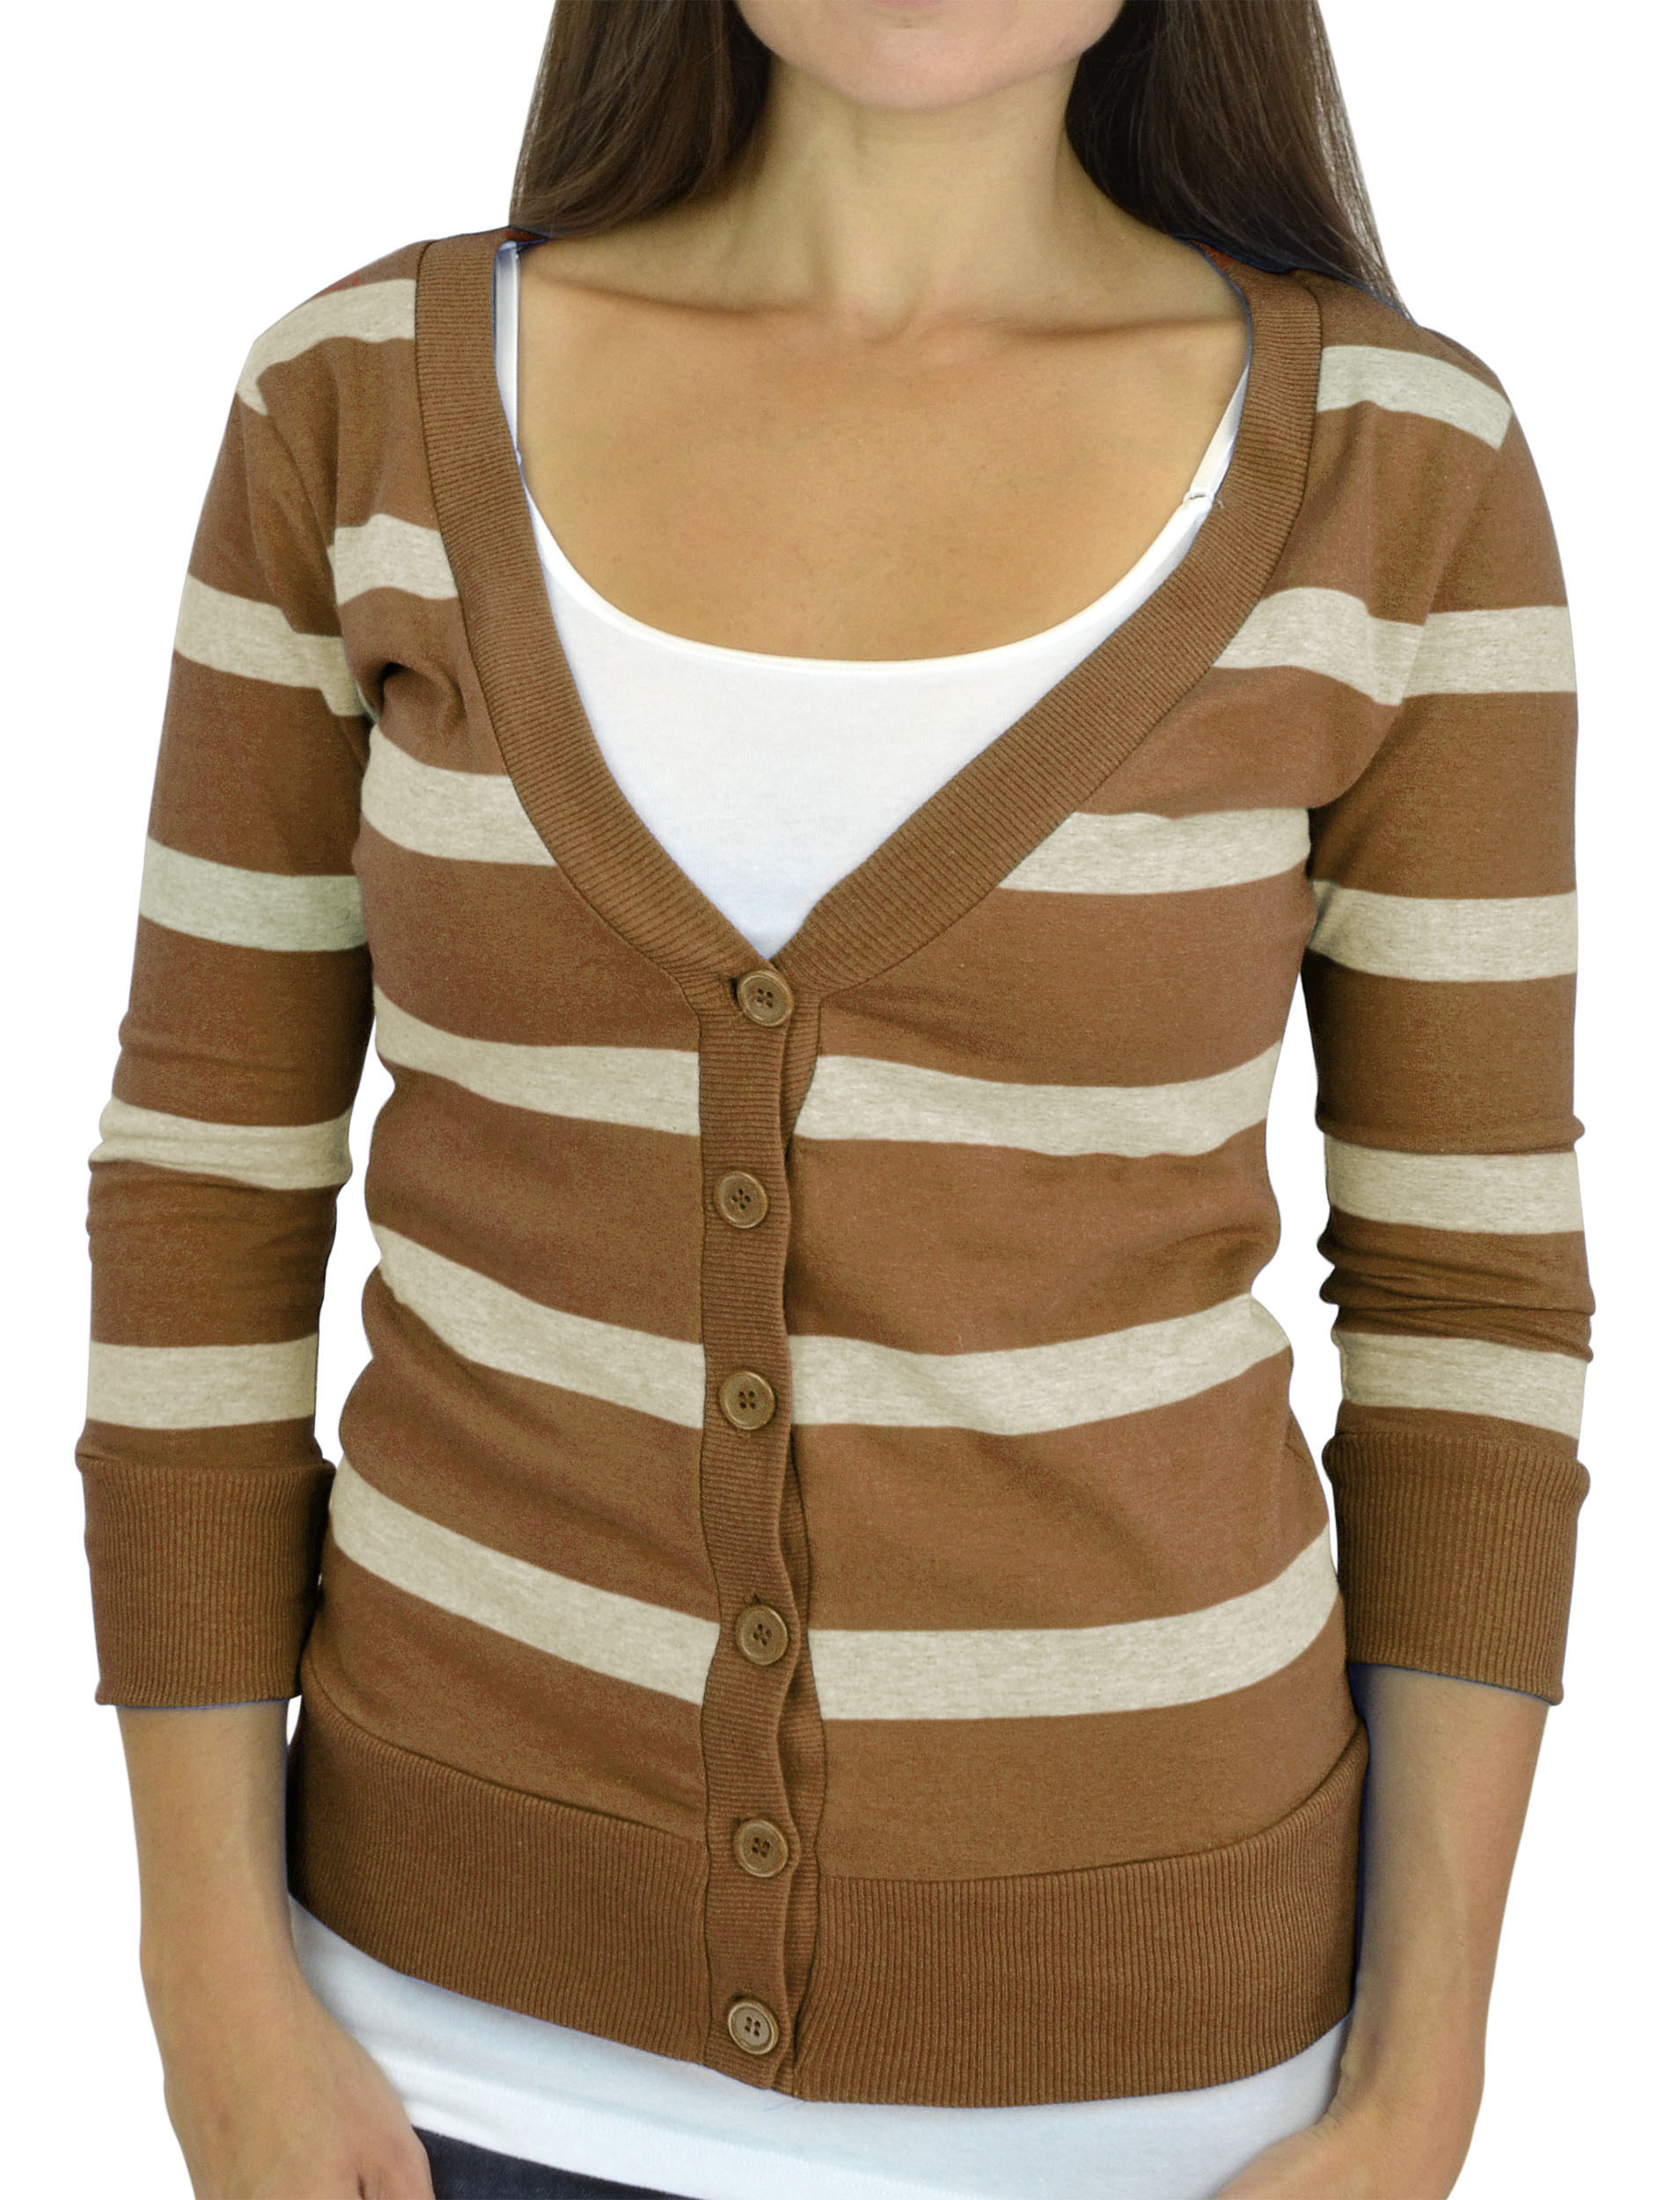 Belle Donne - Women / Girl Junior Size Soft 3/4 Sleeve V-Neck Sweater Cardigans - Heather Beige/Small